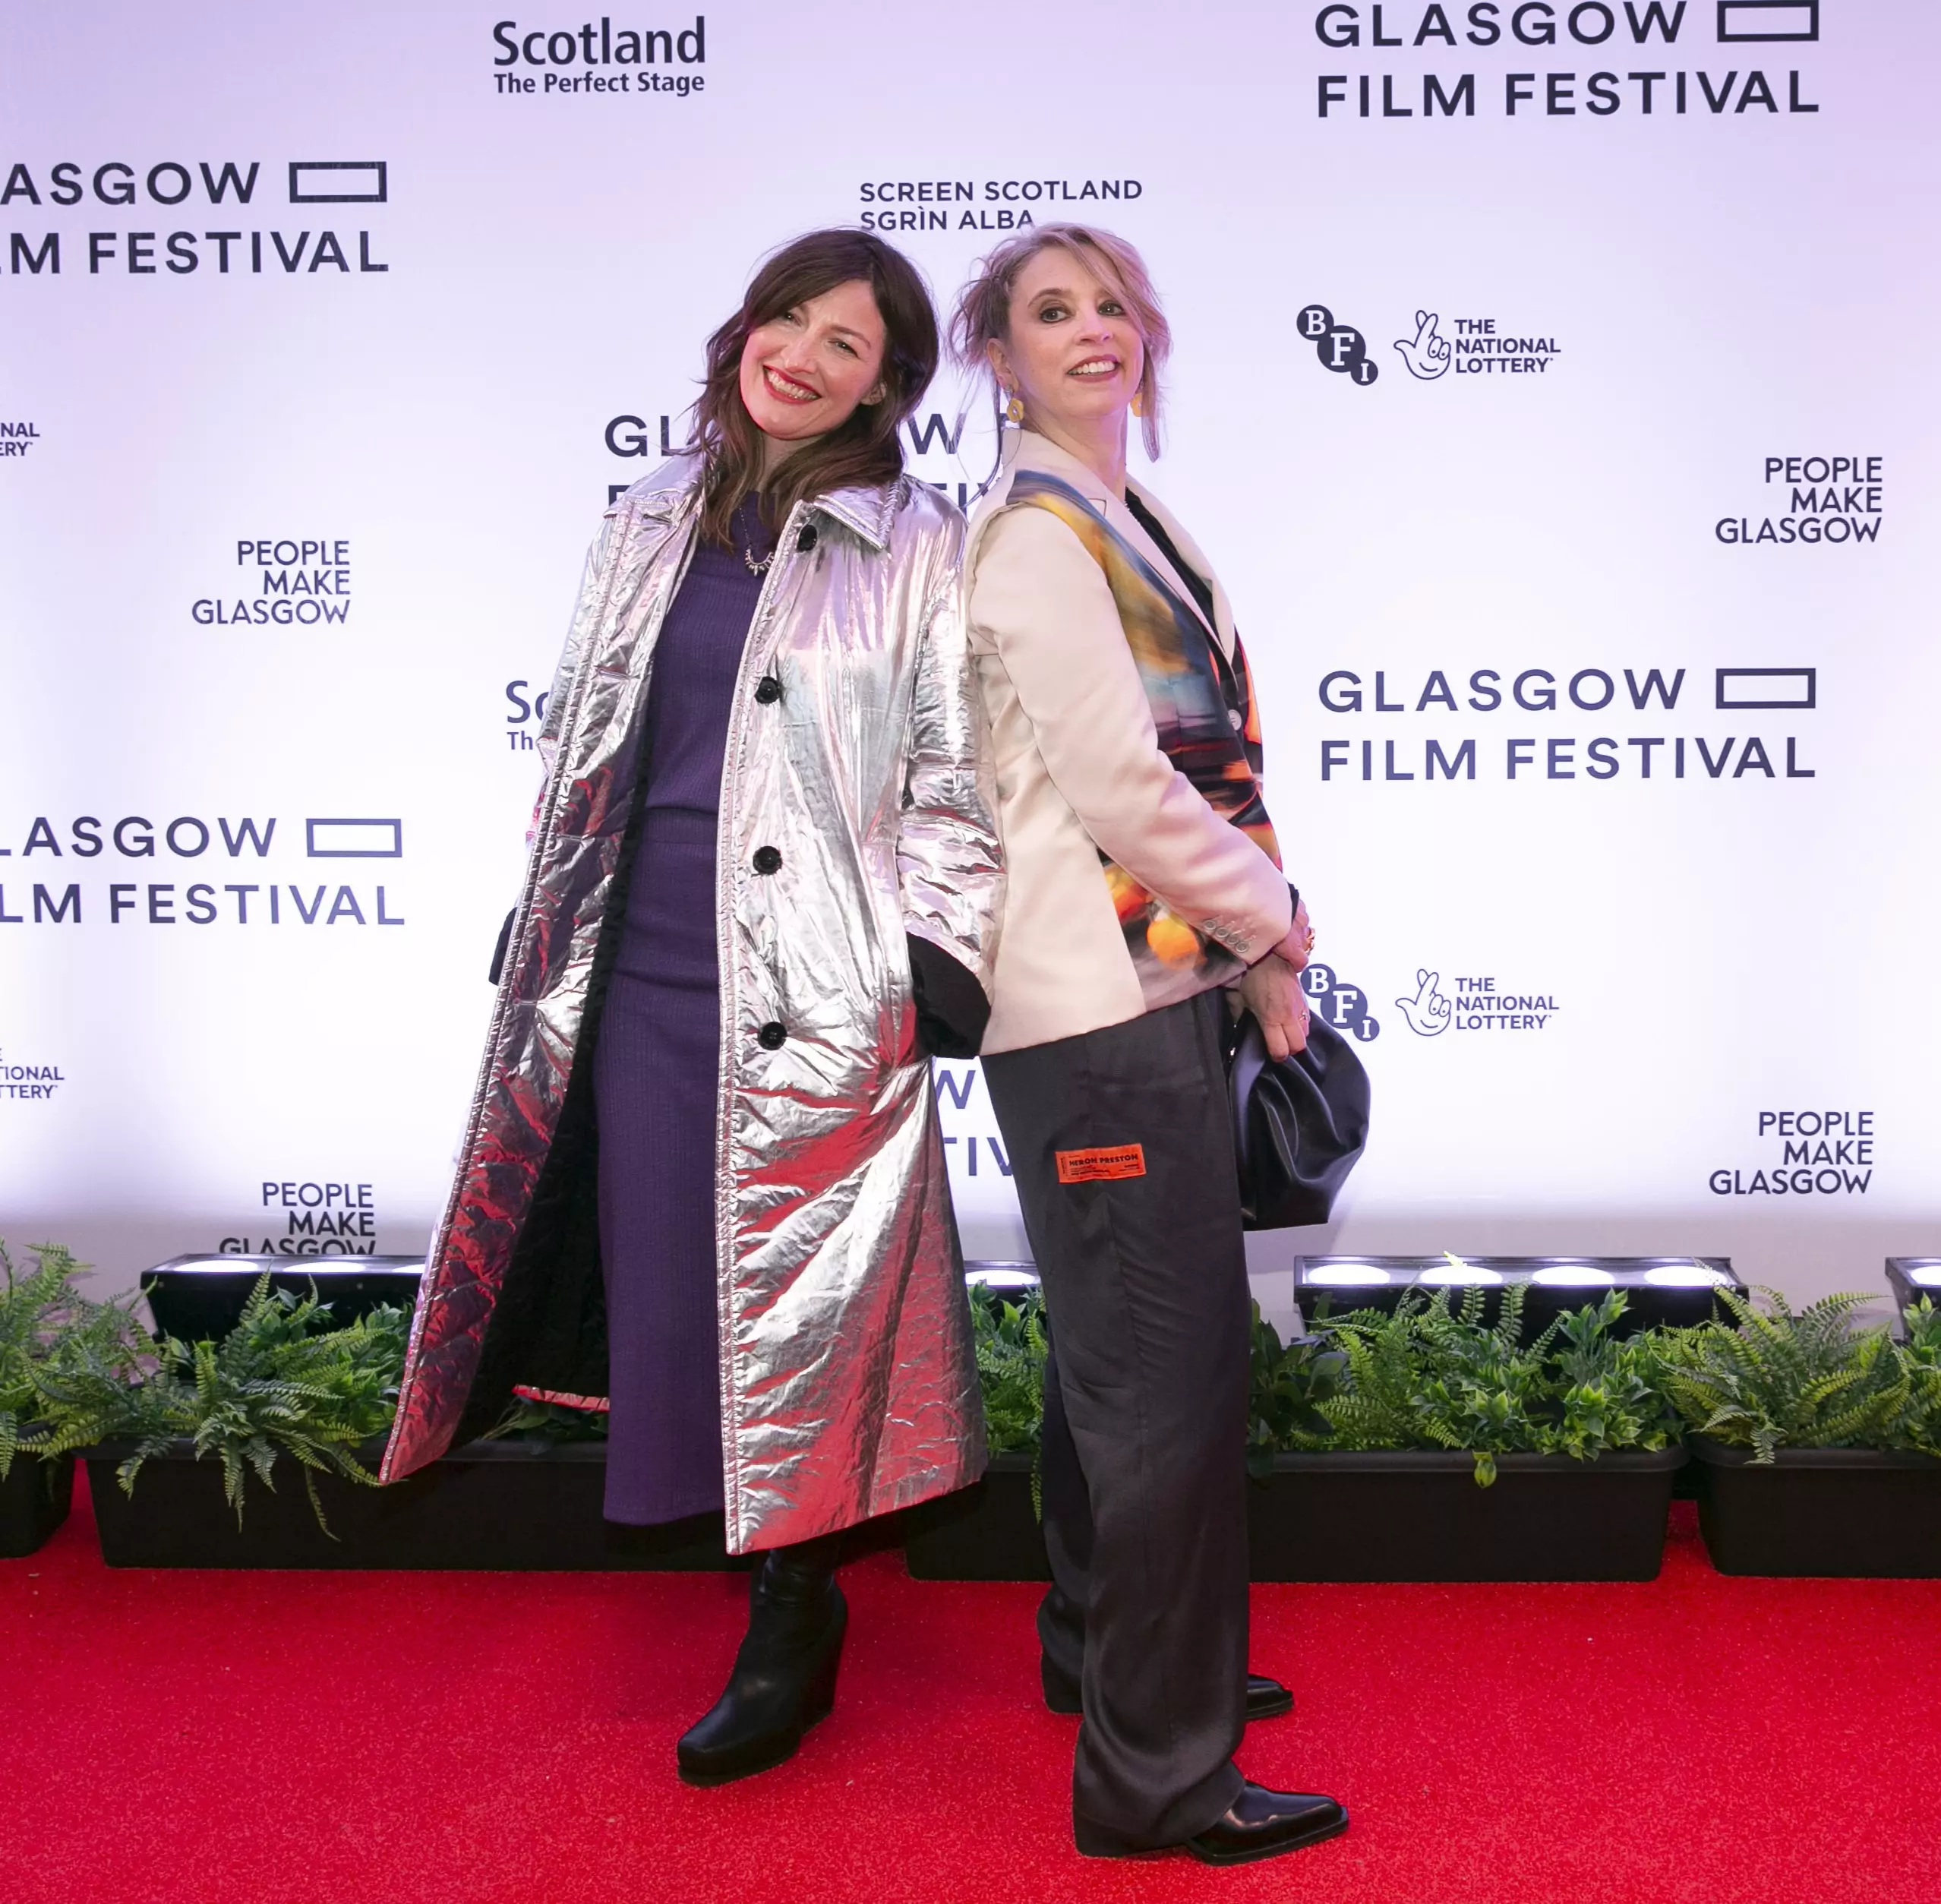 Glasgow festival presenters on red carpet